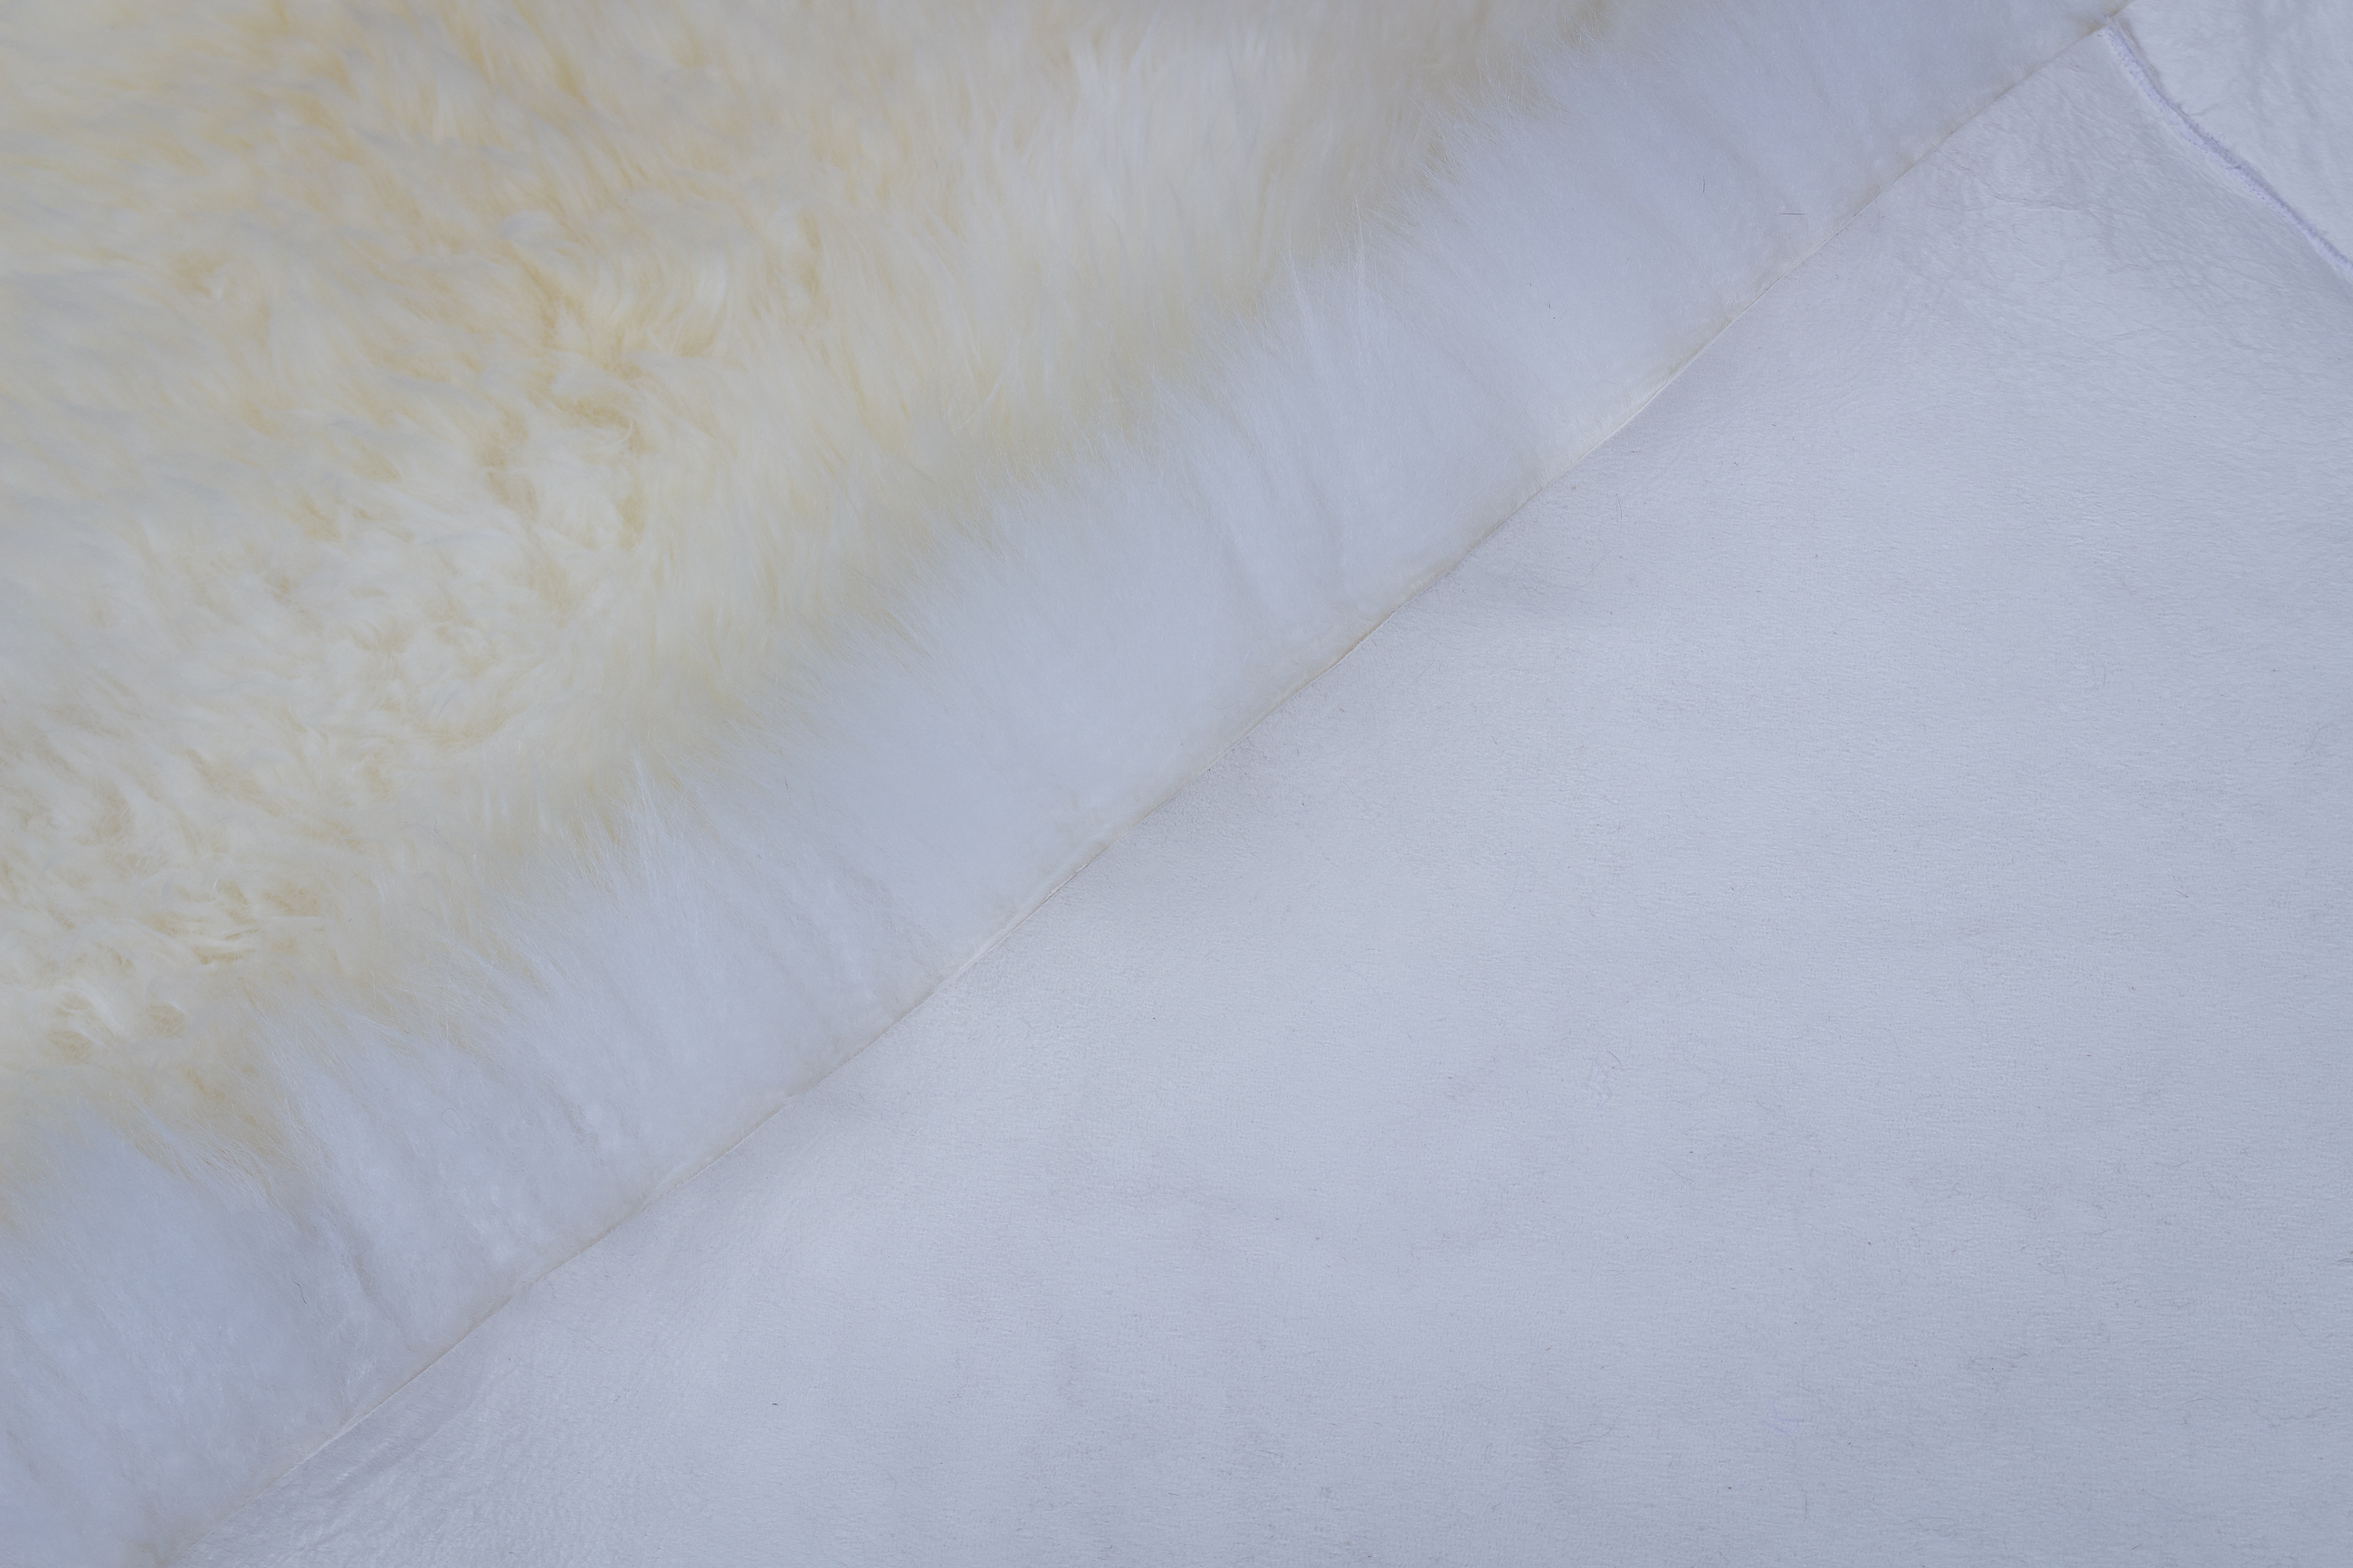 Australian Lamb Fur Carpet natural white